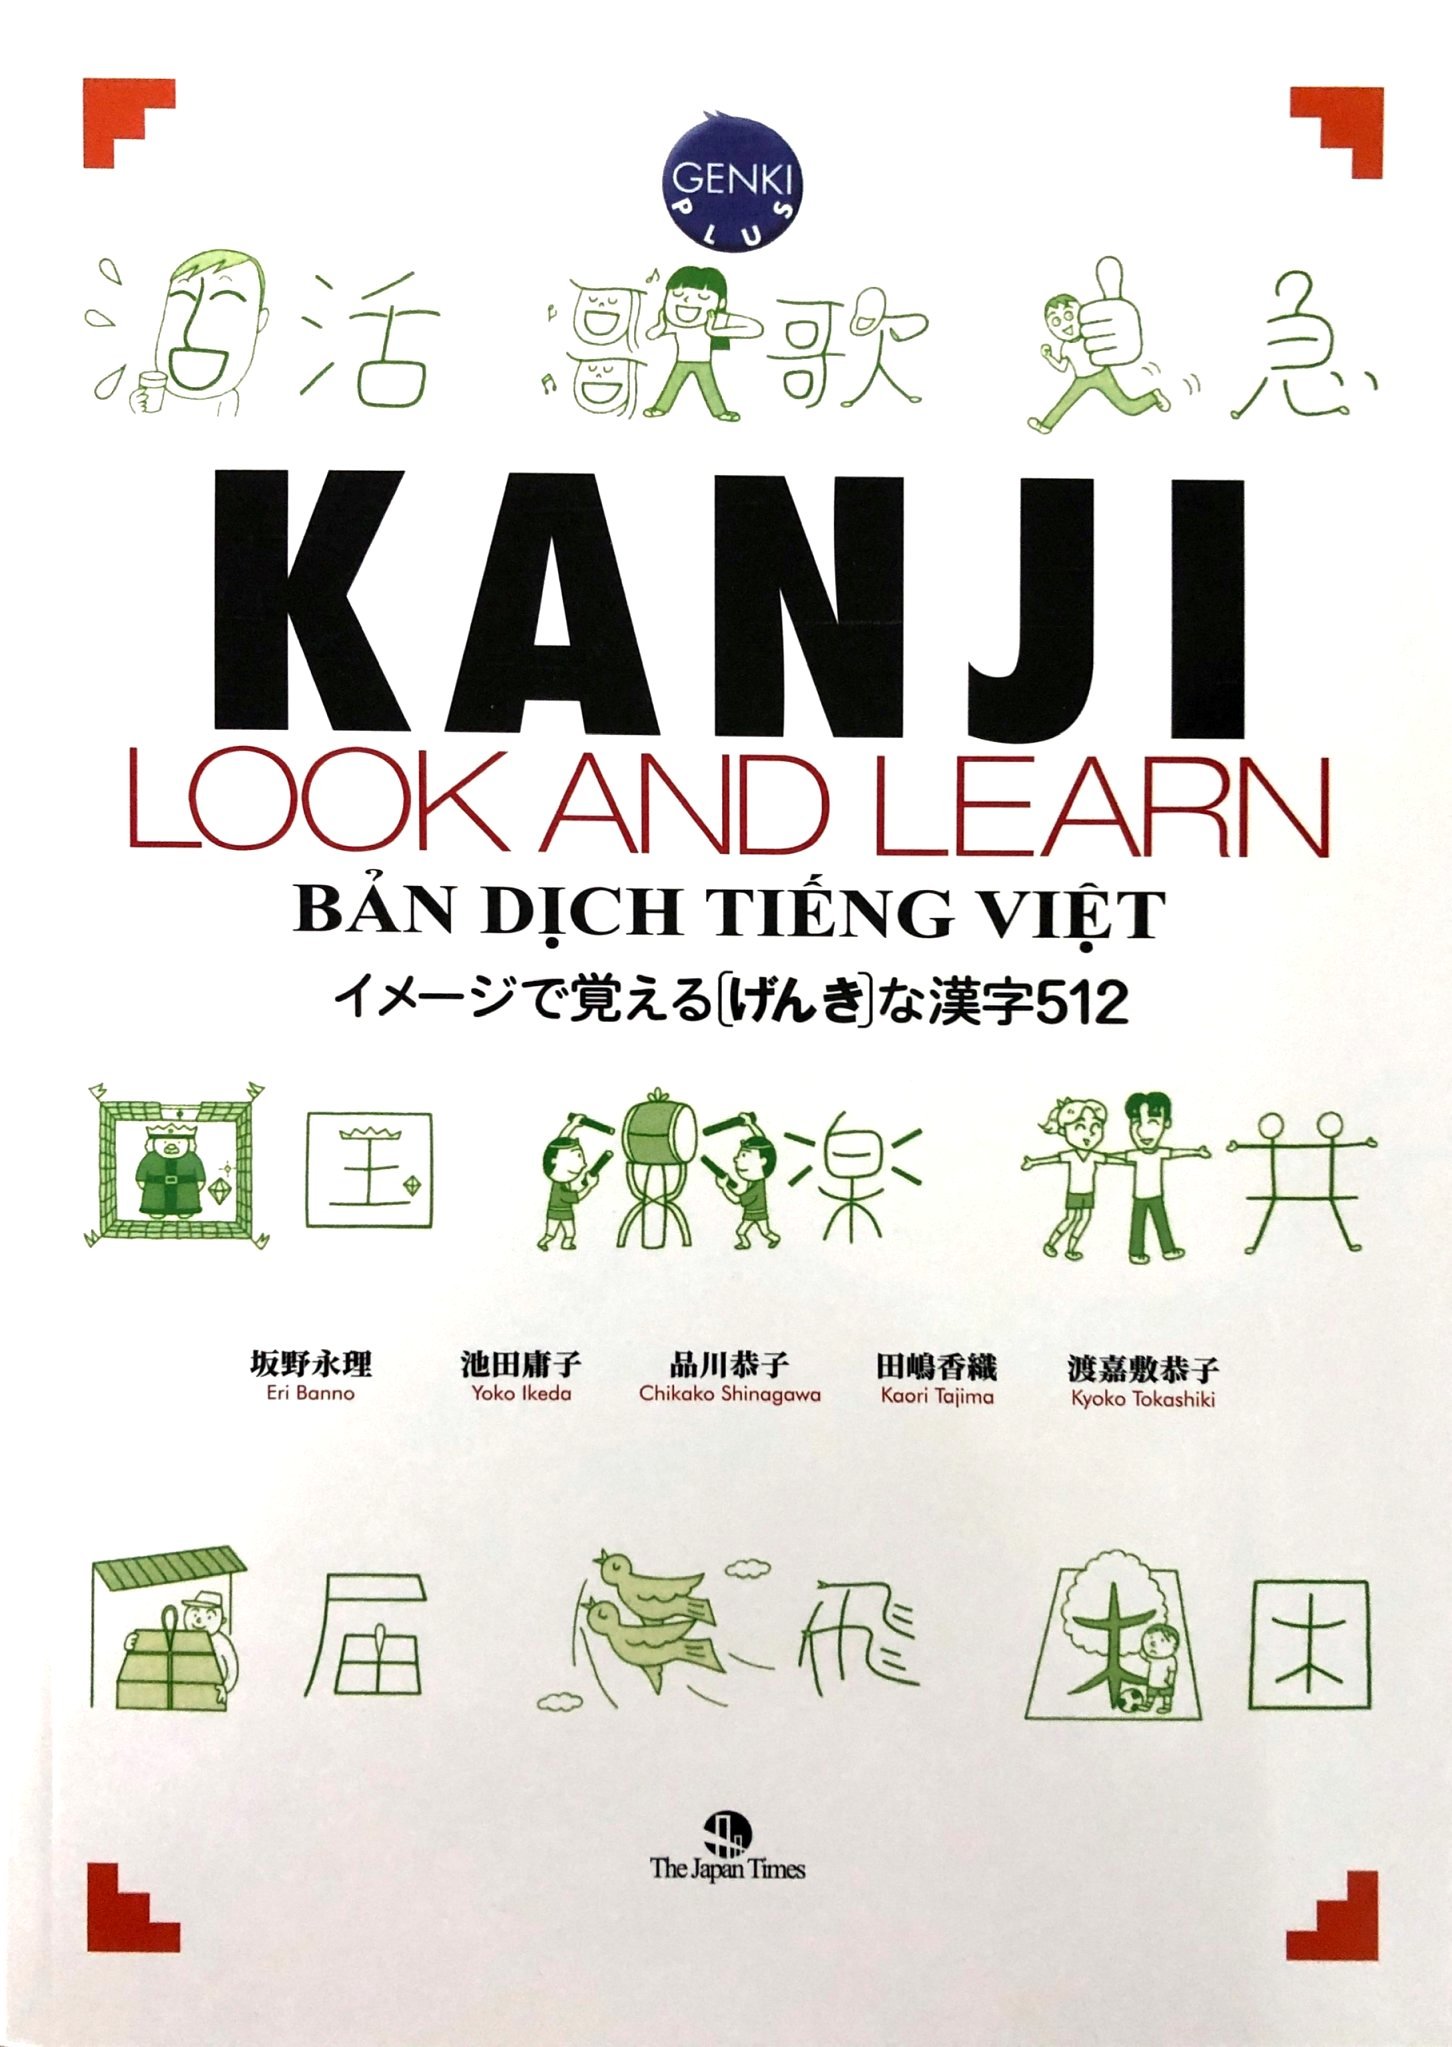 Giáo Trình Kanji look and learn N4 – N5 Bản dịch tiếng việt | イメージで覚える〈げんき〉な漢字512